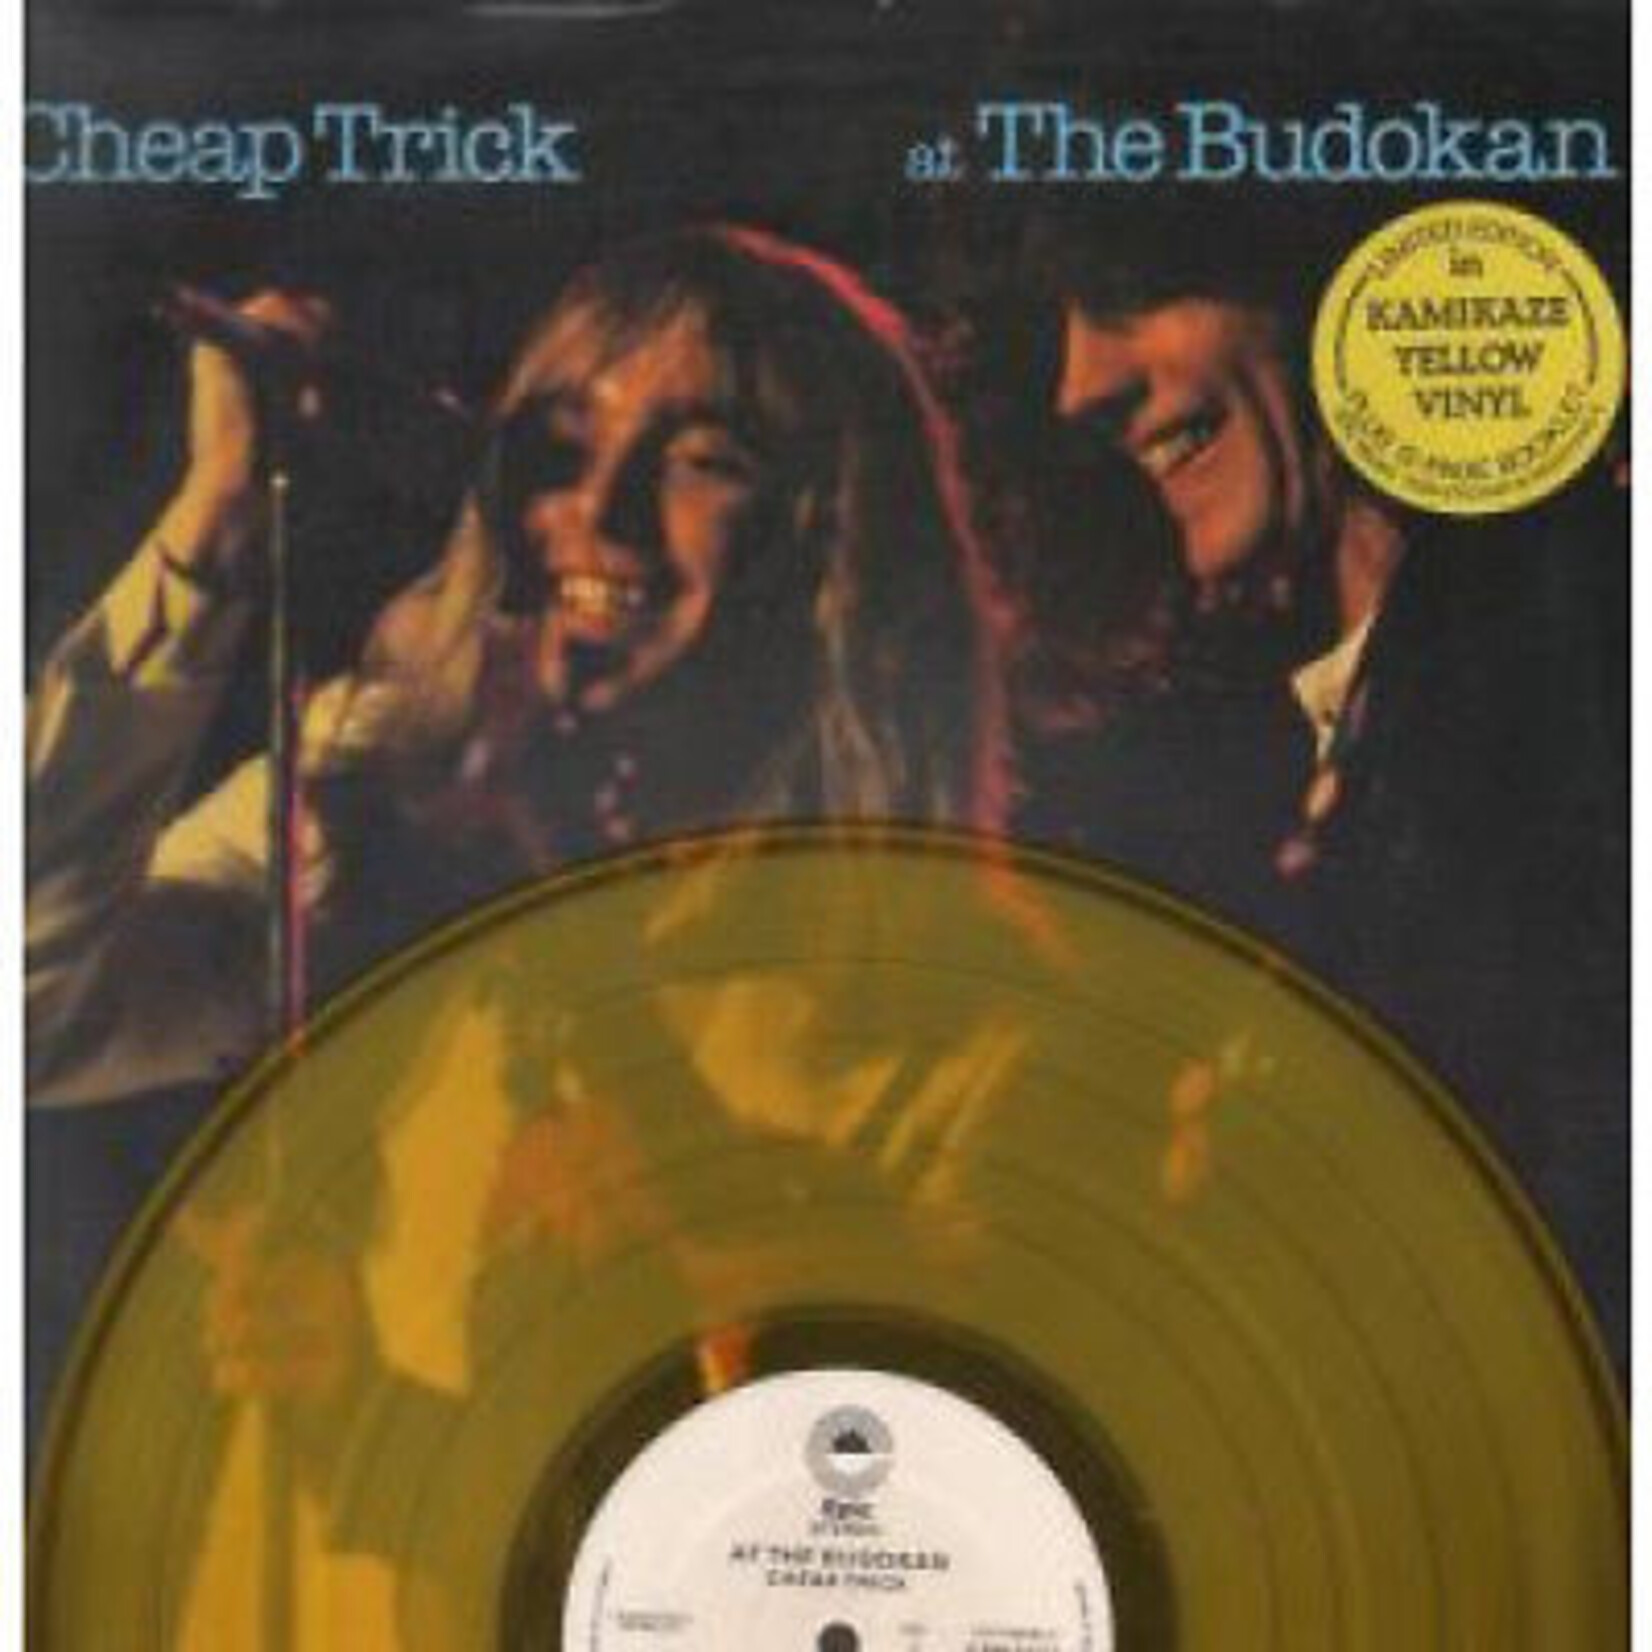 CHEAP TRICK - AT THE BUDOKAN - LP (YELLOW)